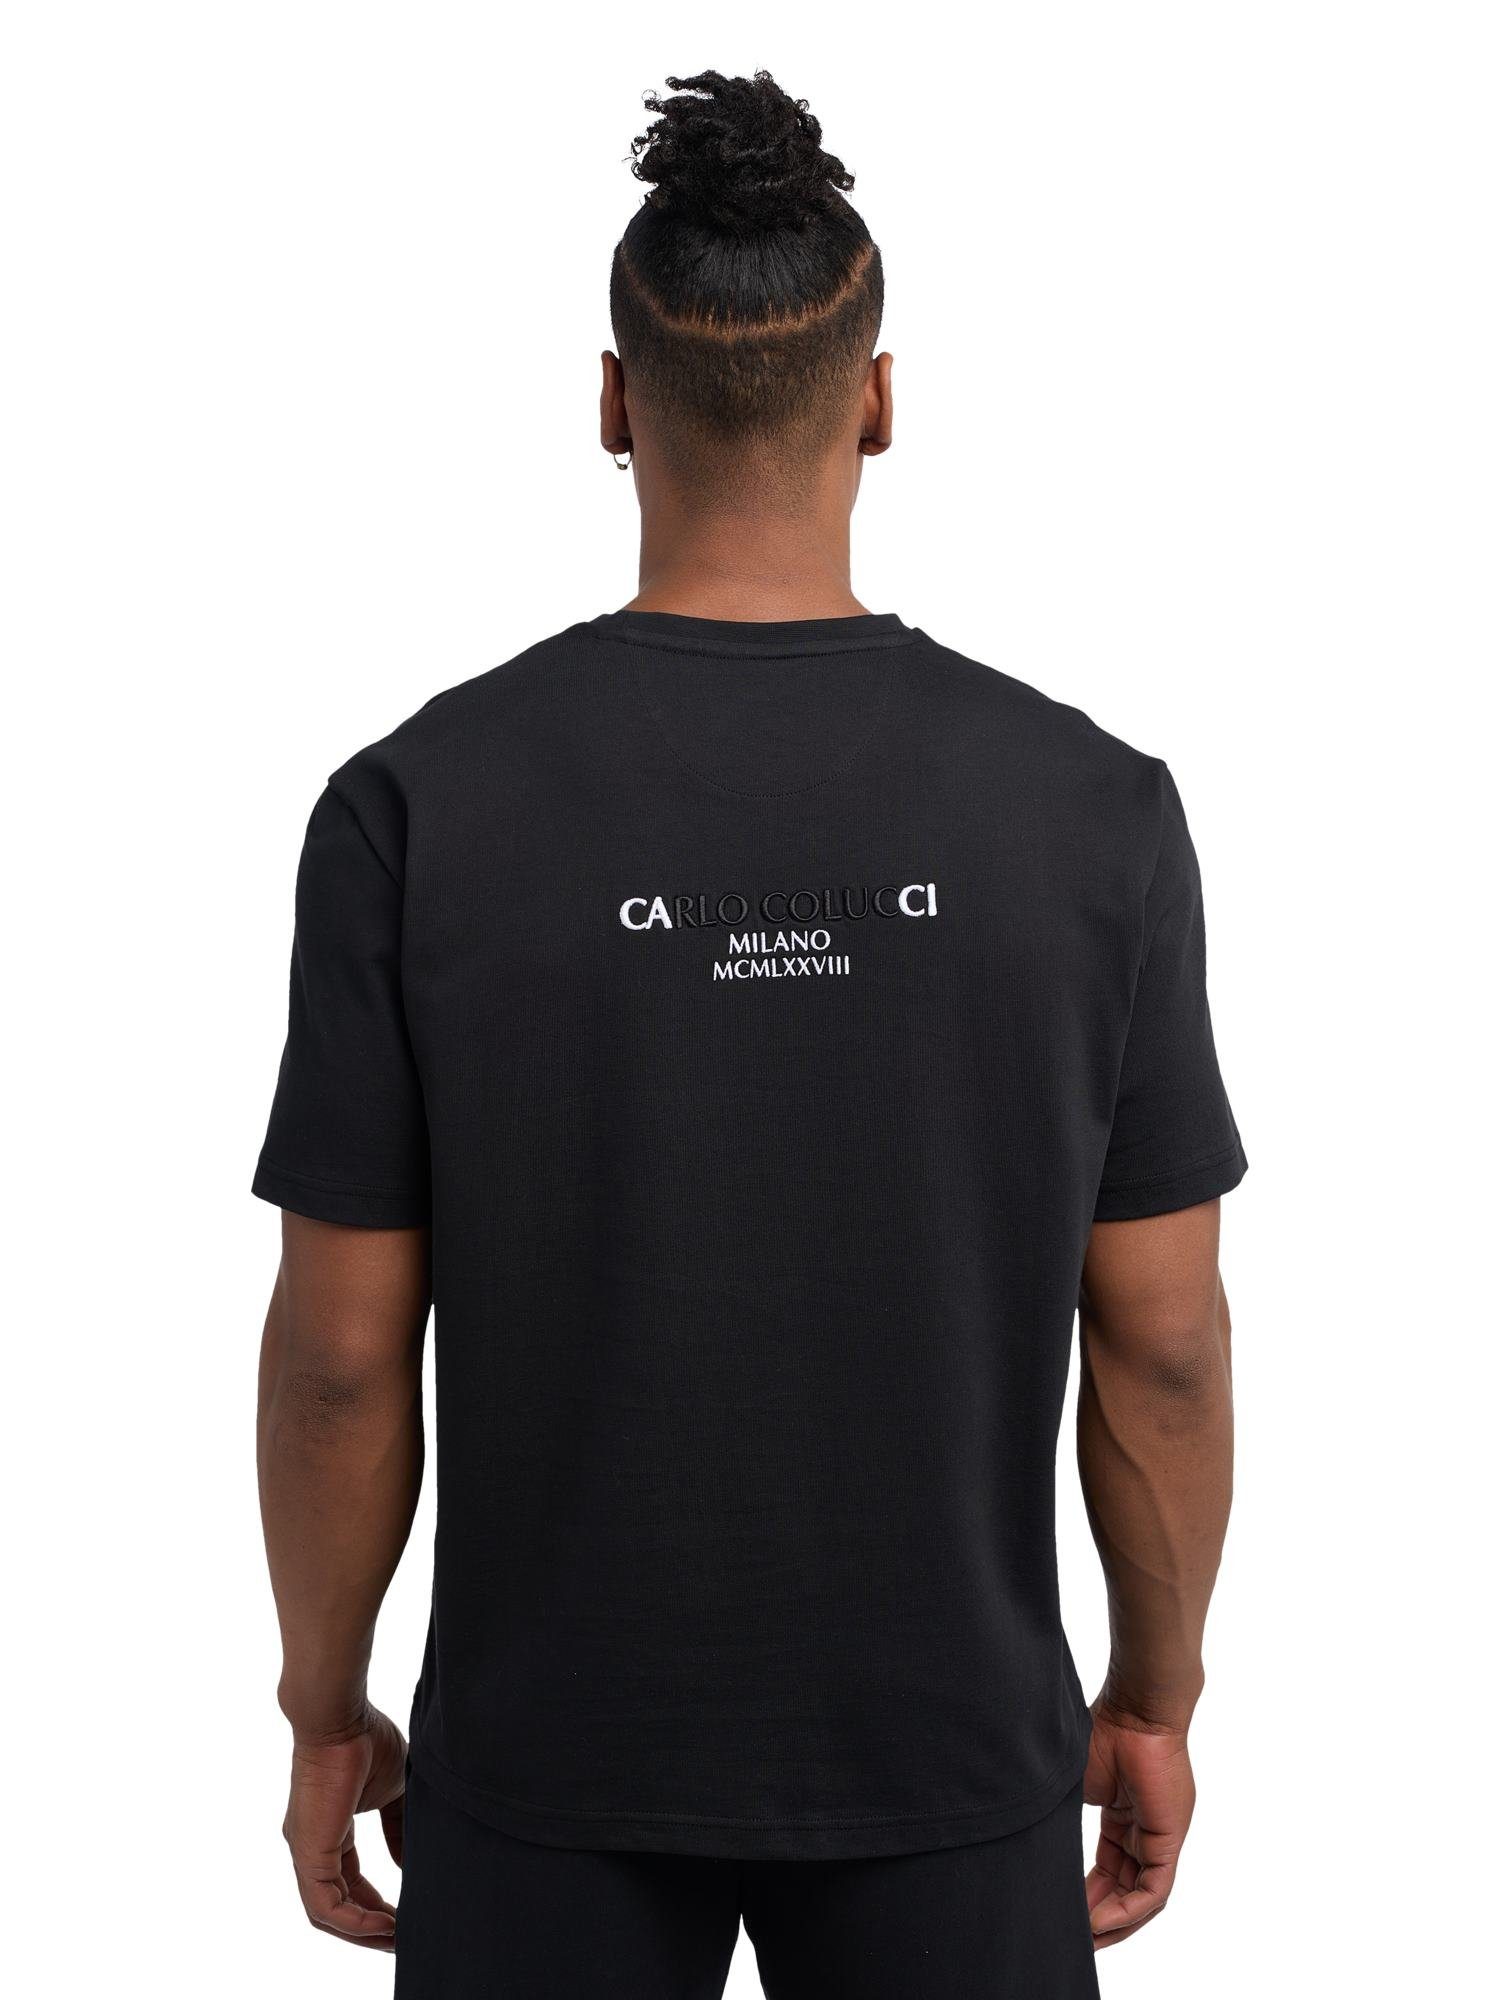 CARLO COLUCCI T-Shirt De Pandis Schwarz